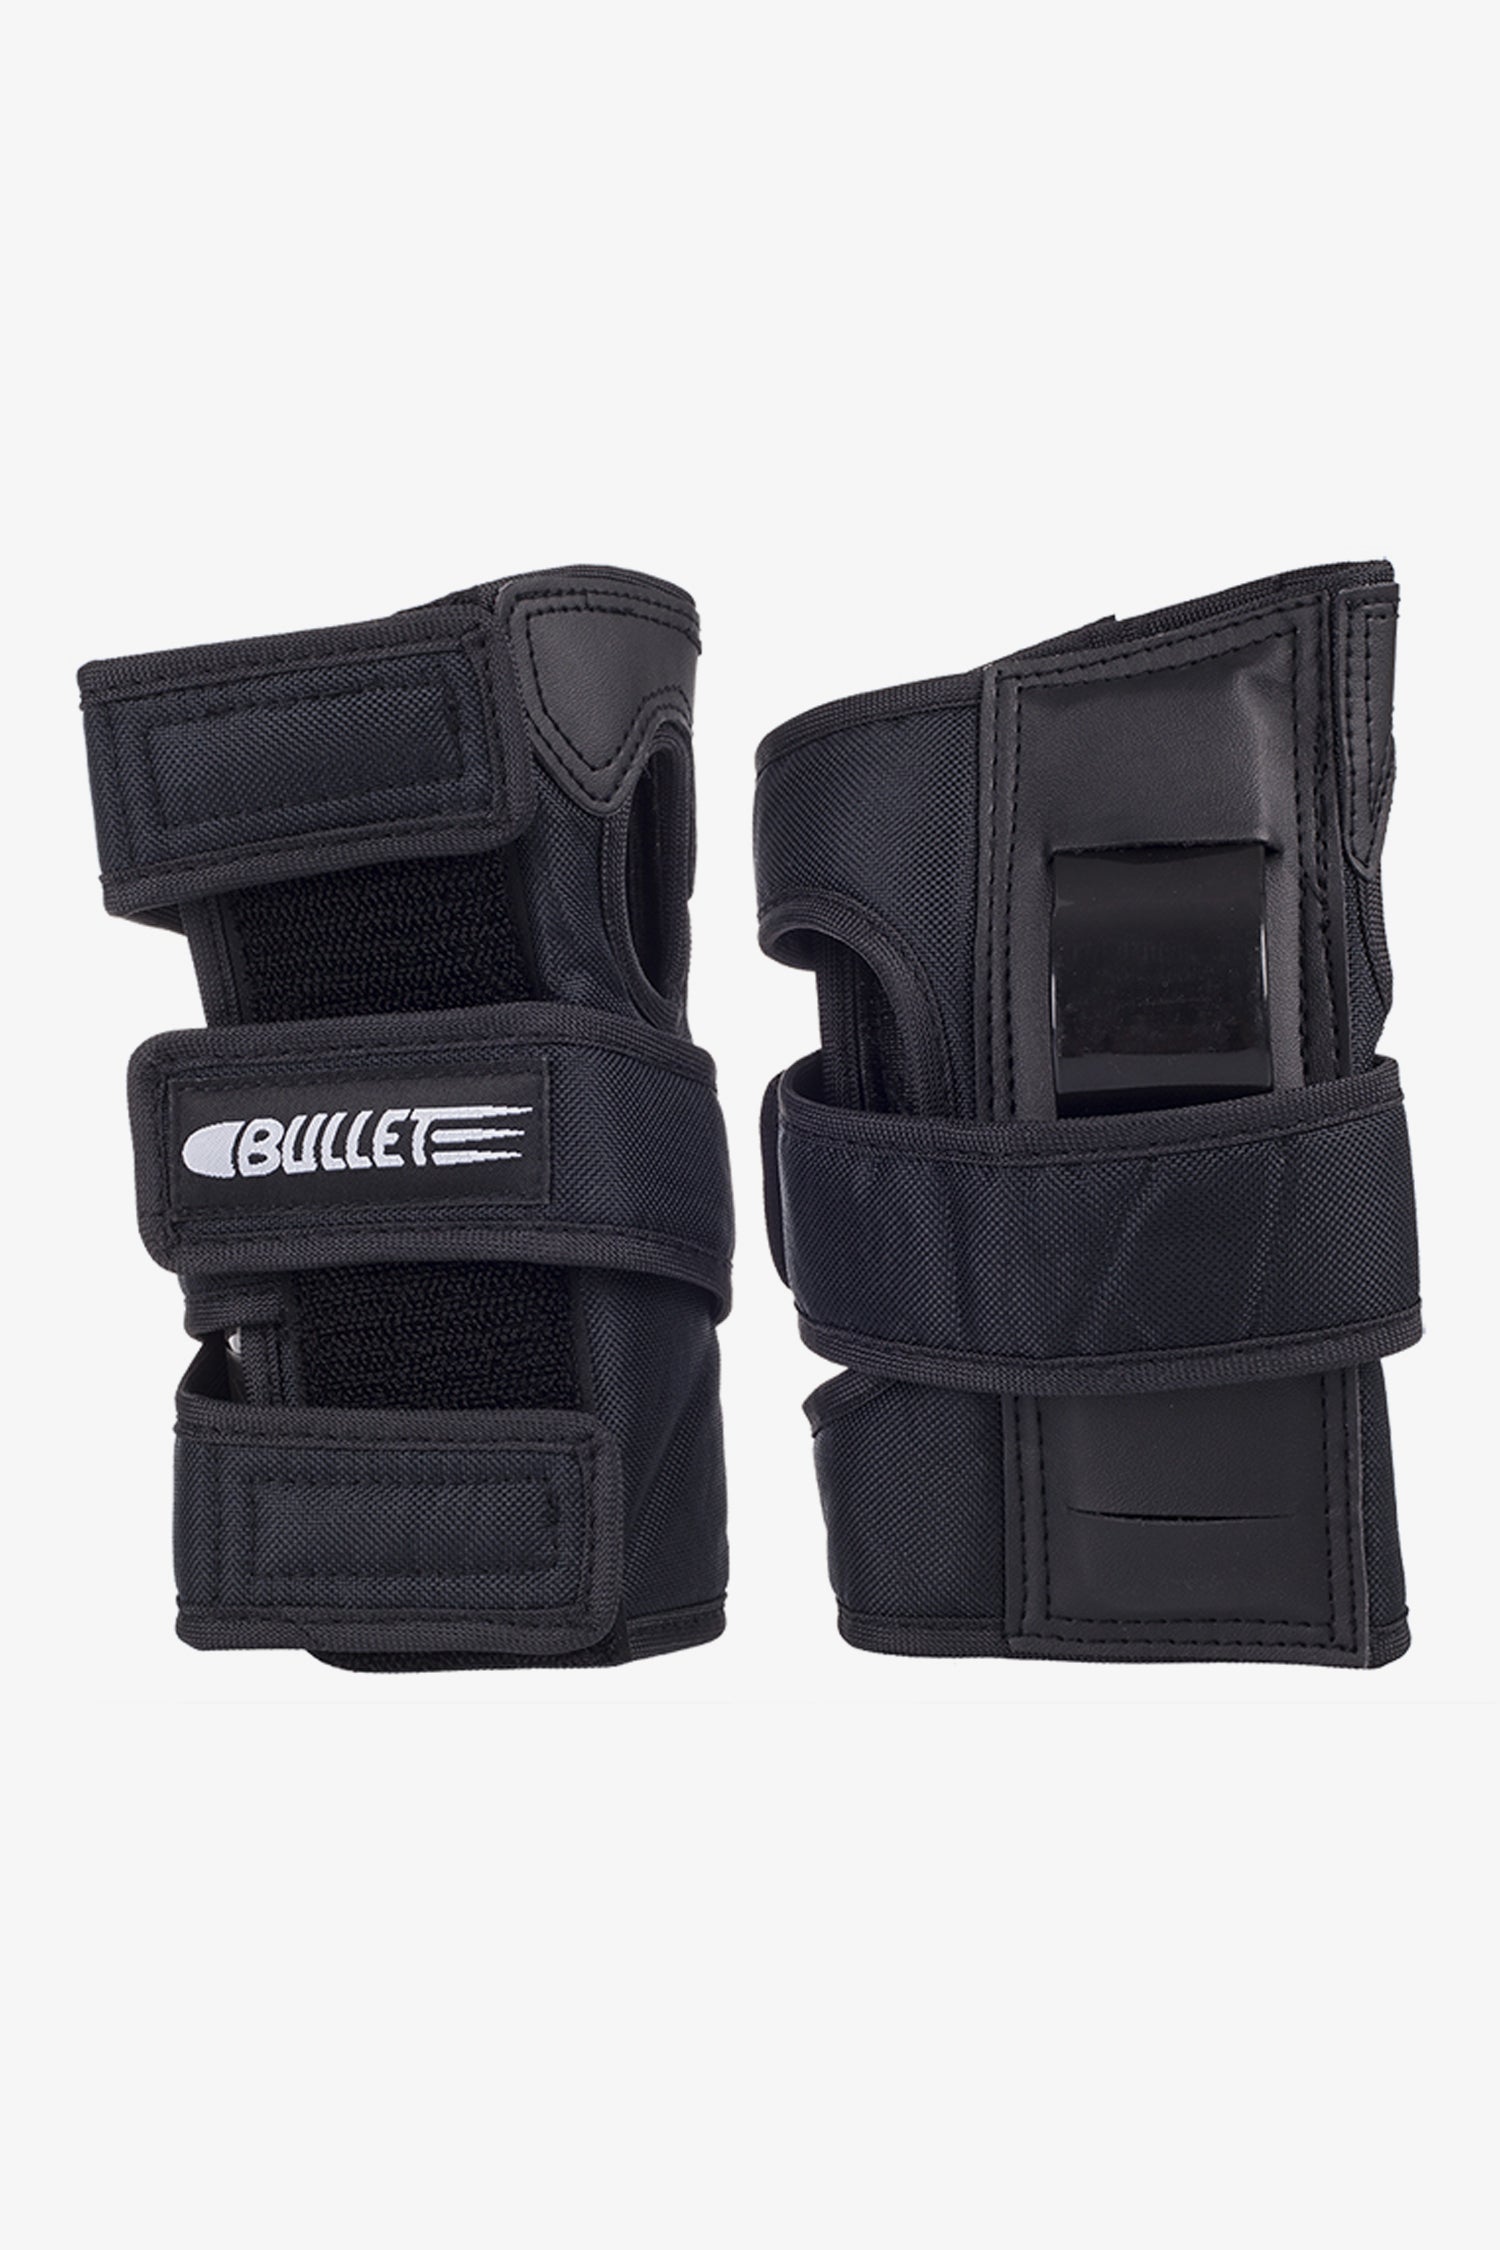 Selectshop FRAME - BULLET Wrist Guard Adult Bullet Protective Gear Dubai